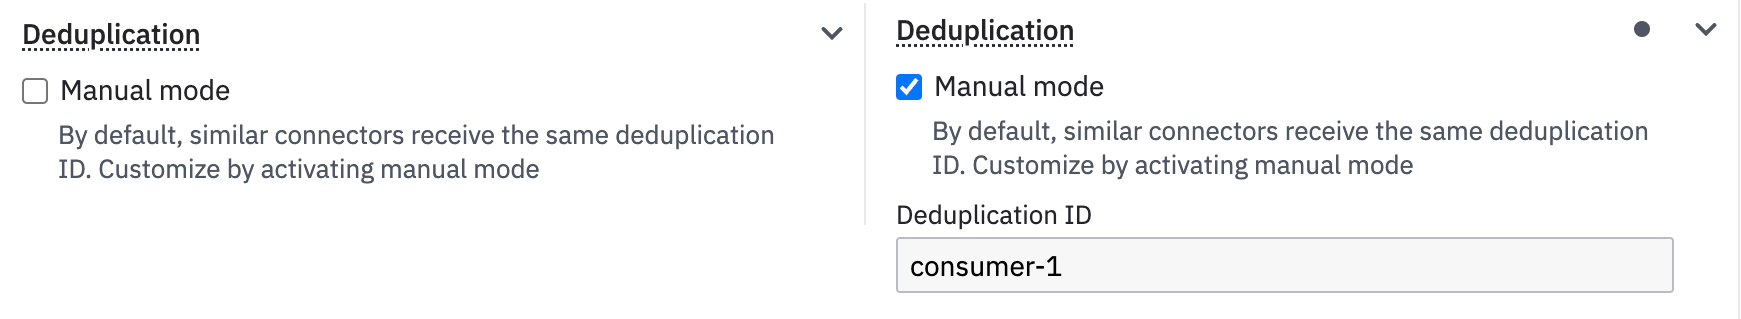 Deduplication input example